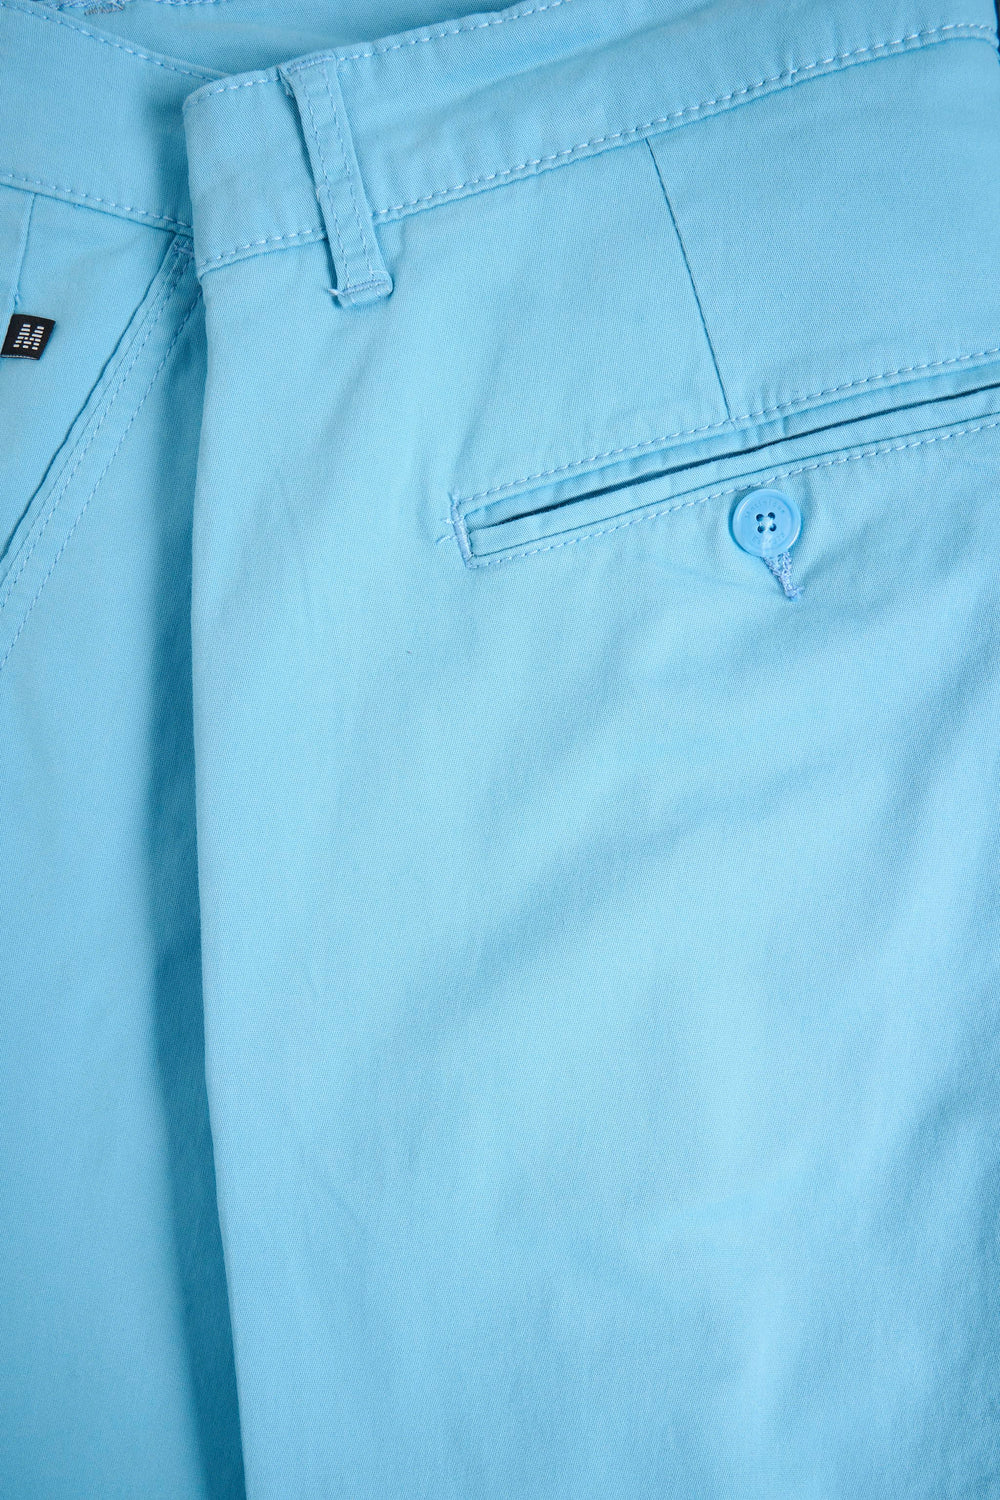 Matinique Thomas Chino Shorts Light Blue - Urban Menswear